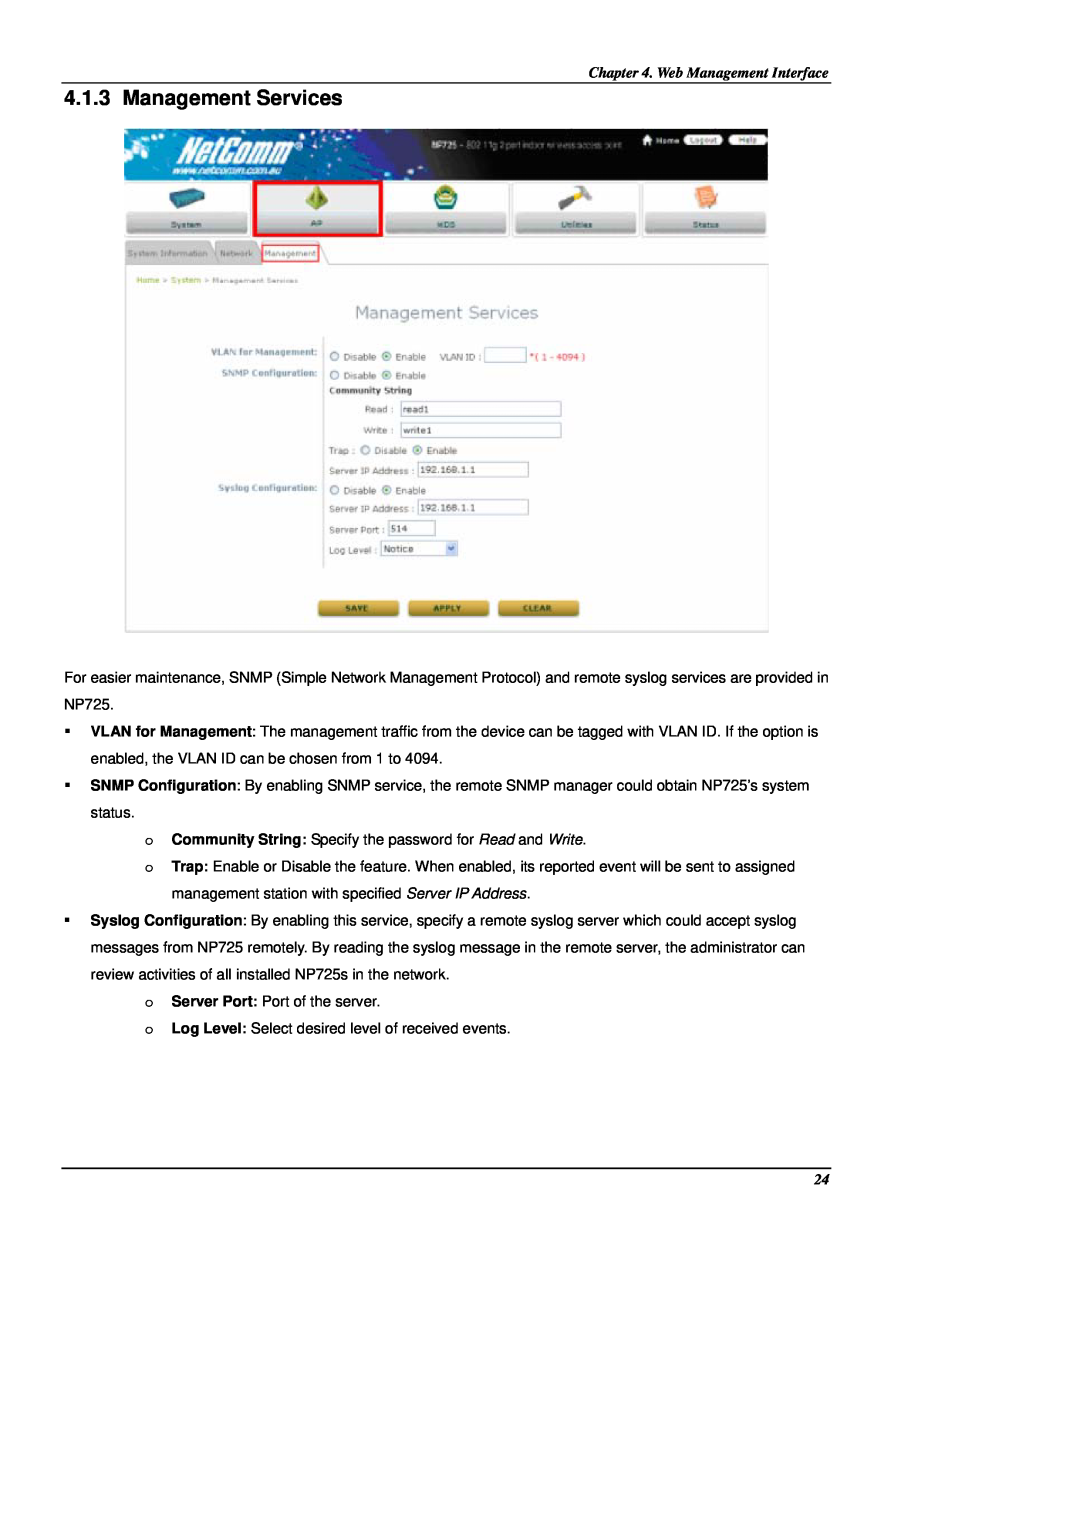 NetComm NP725 manual Management Services, Web Management Interface 